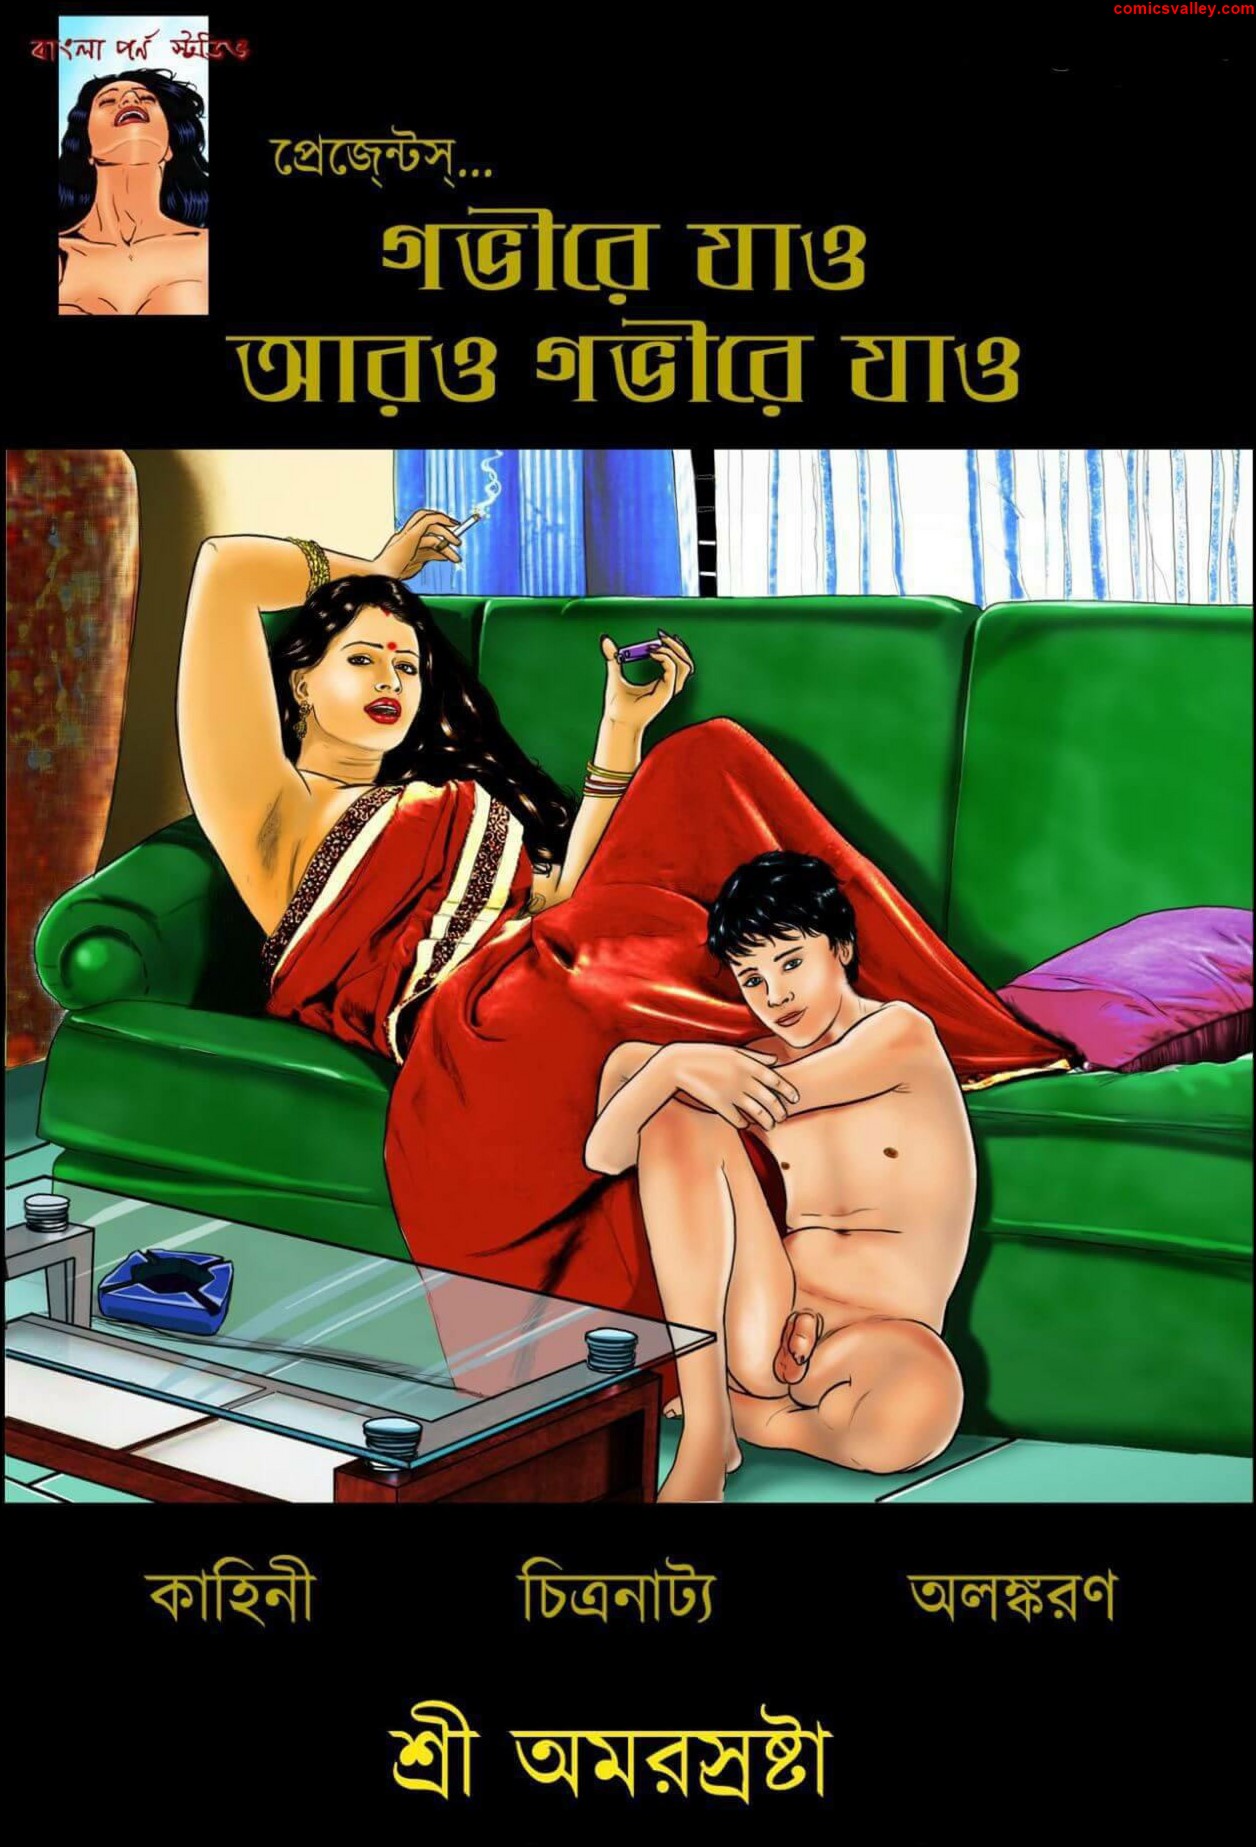 Bangladeshi porn comics